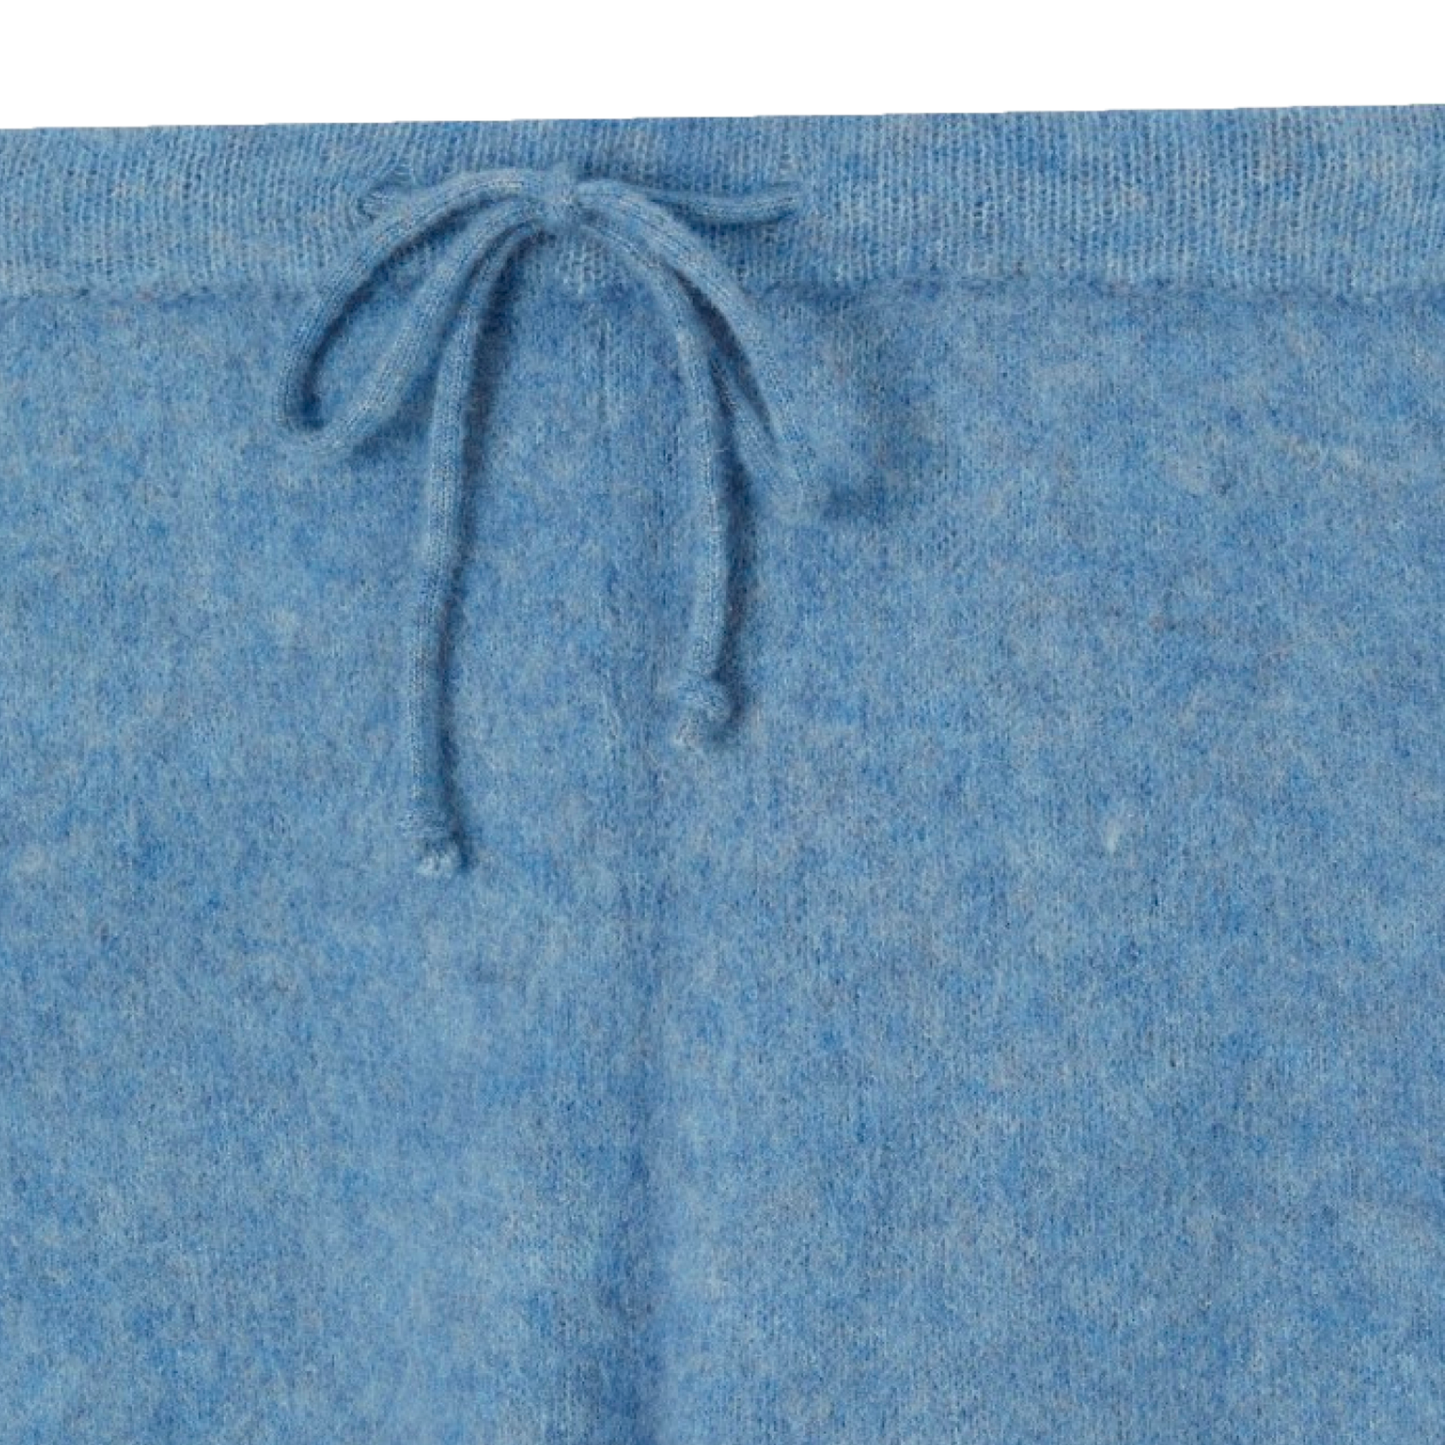 Vitow Knit Pants, Blue